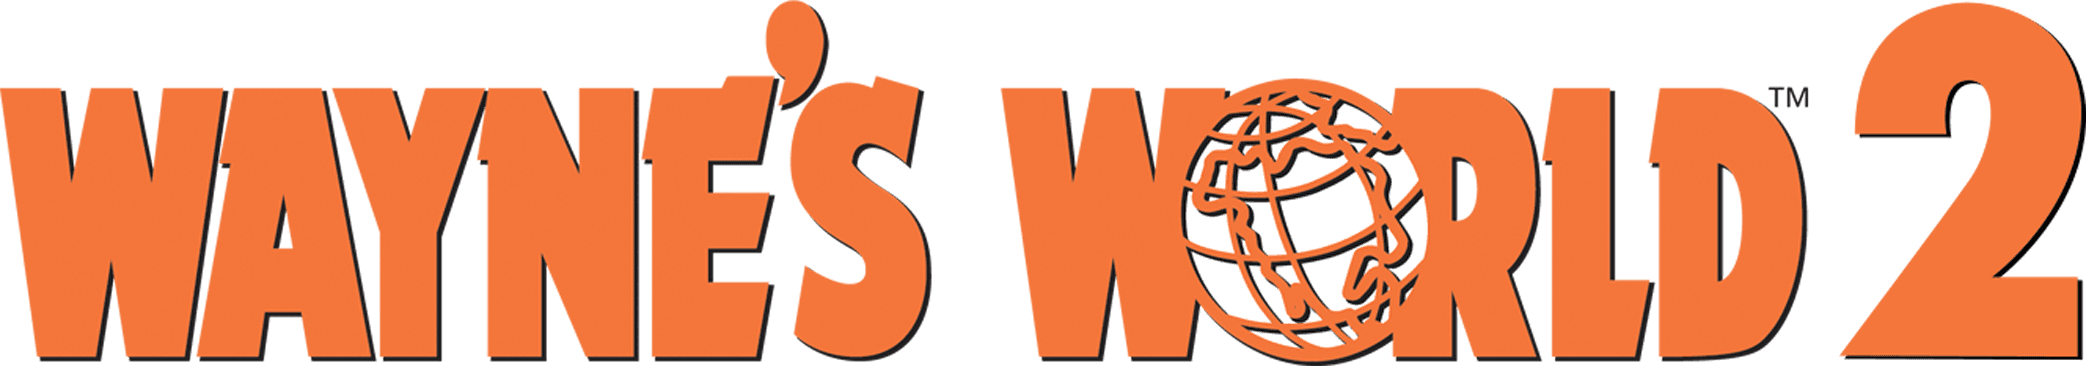 Wayne's World 2 logo